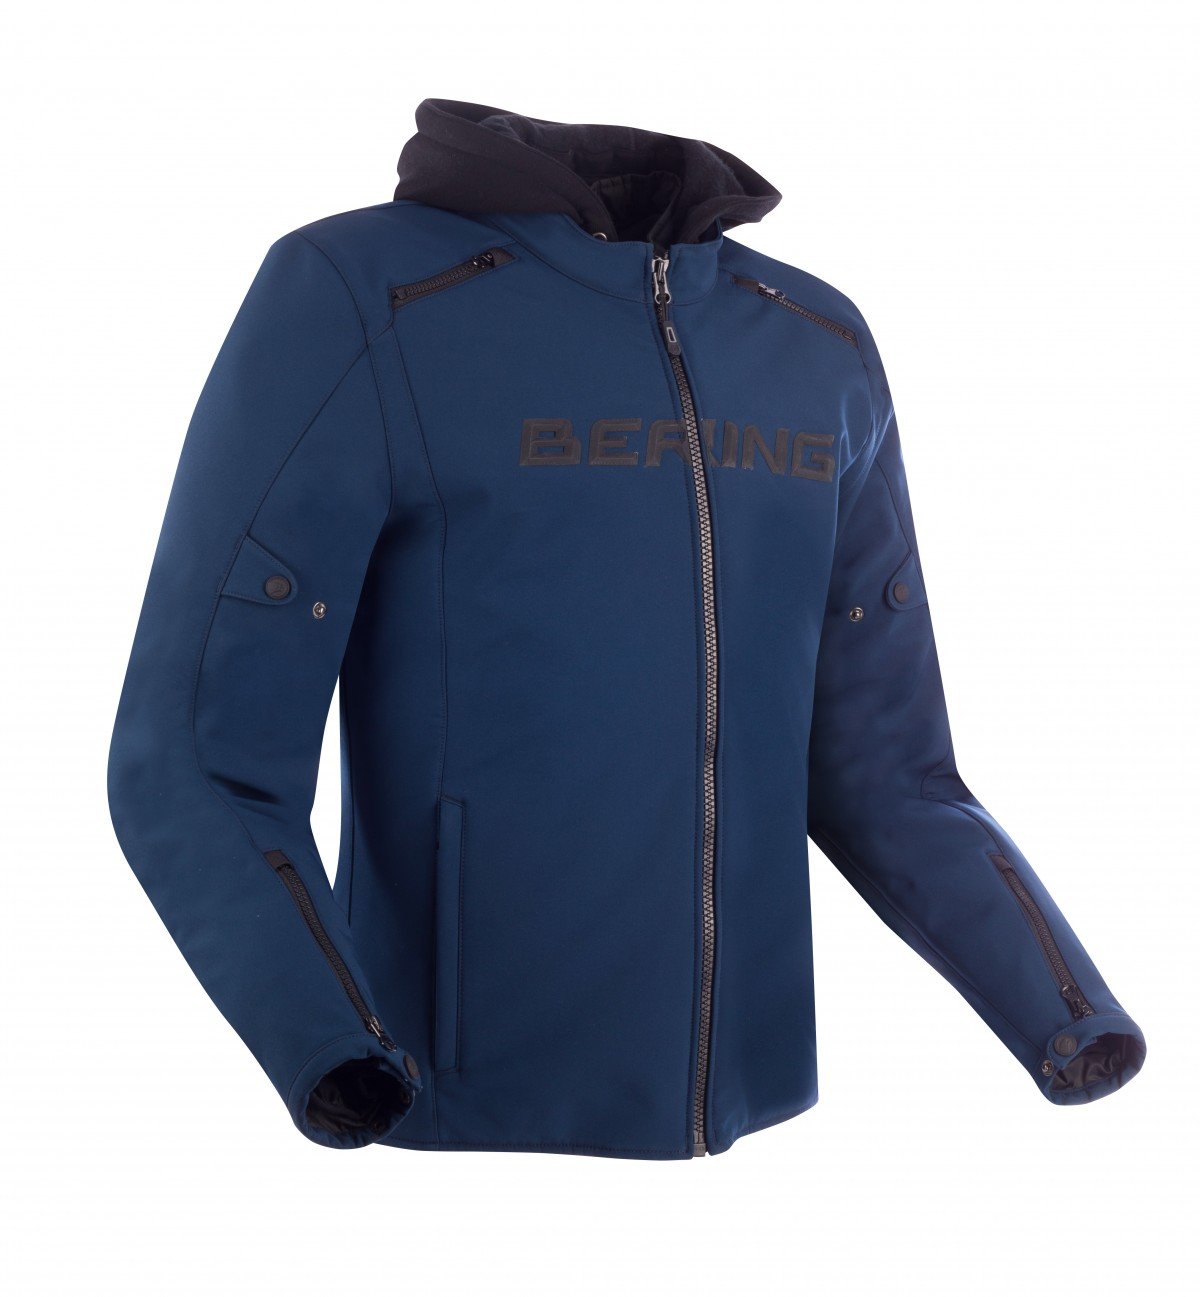 Image of Bering Elite Jacket Navy Blue Size S EN